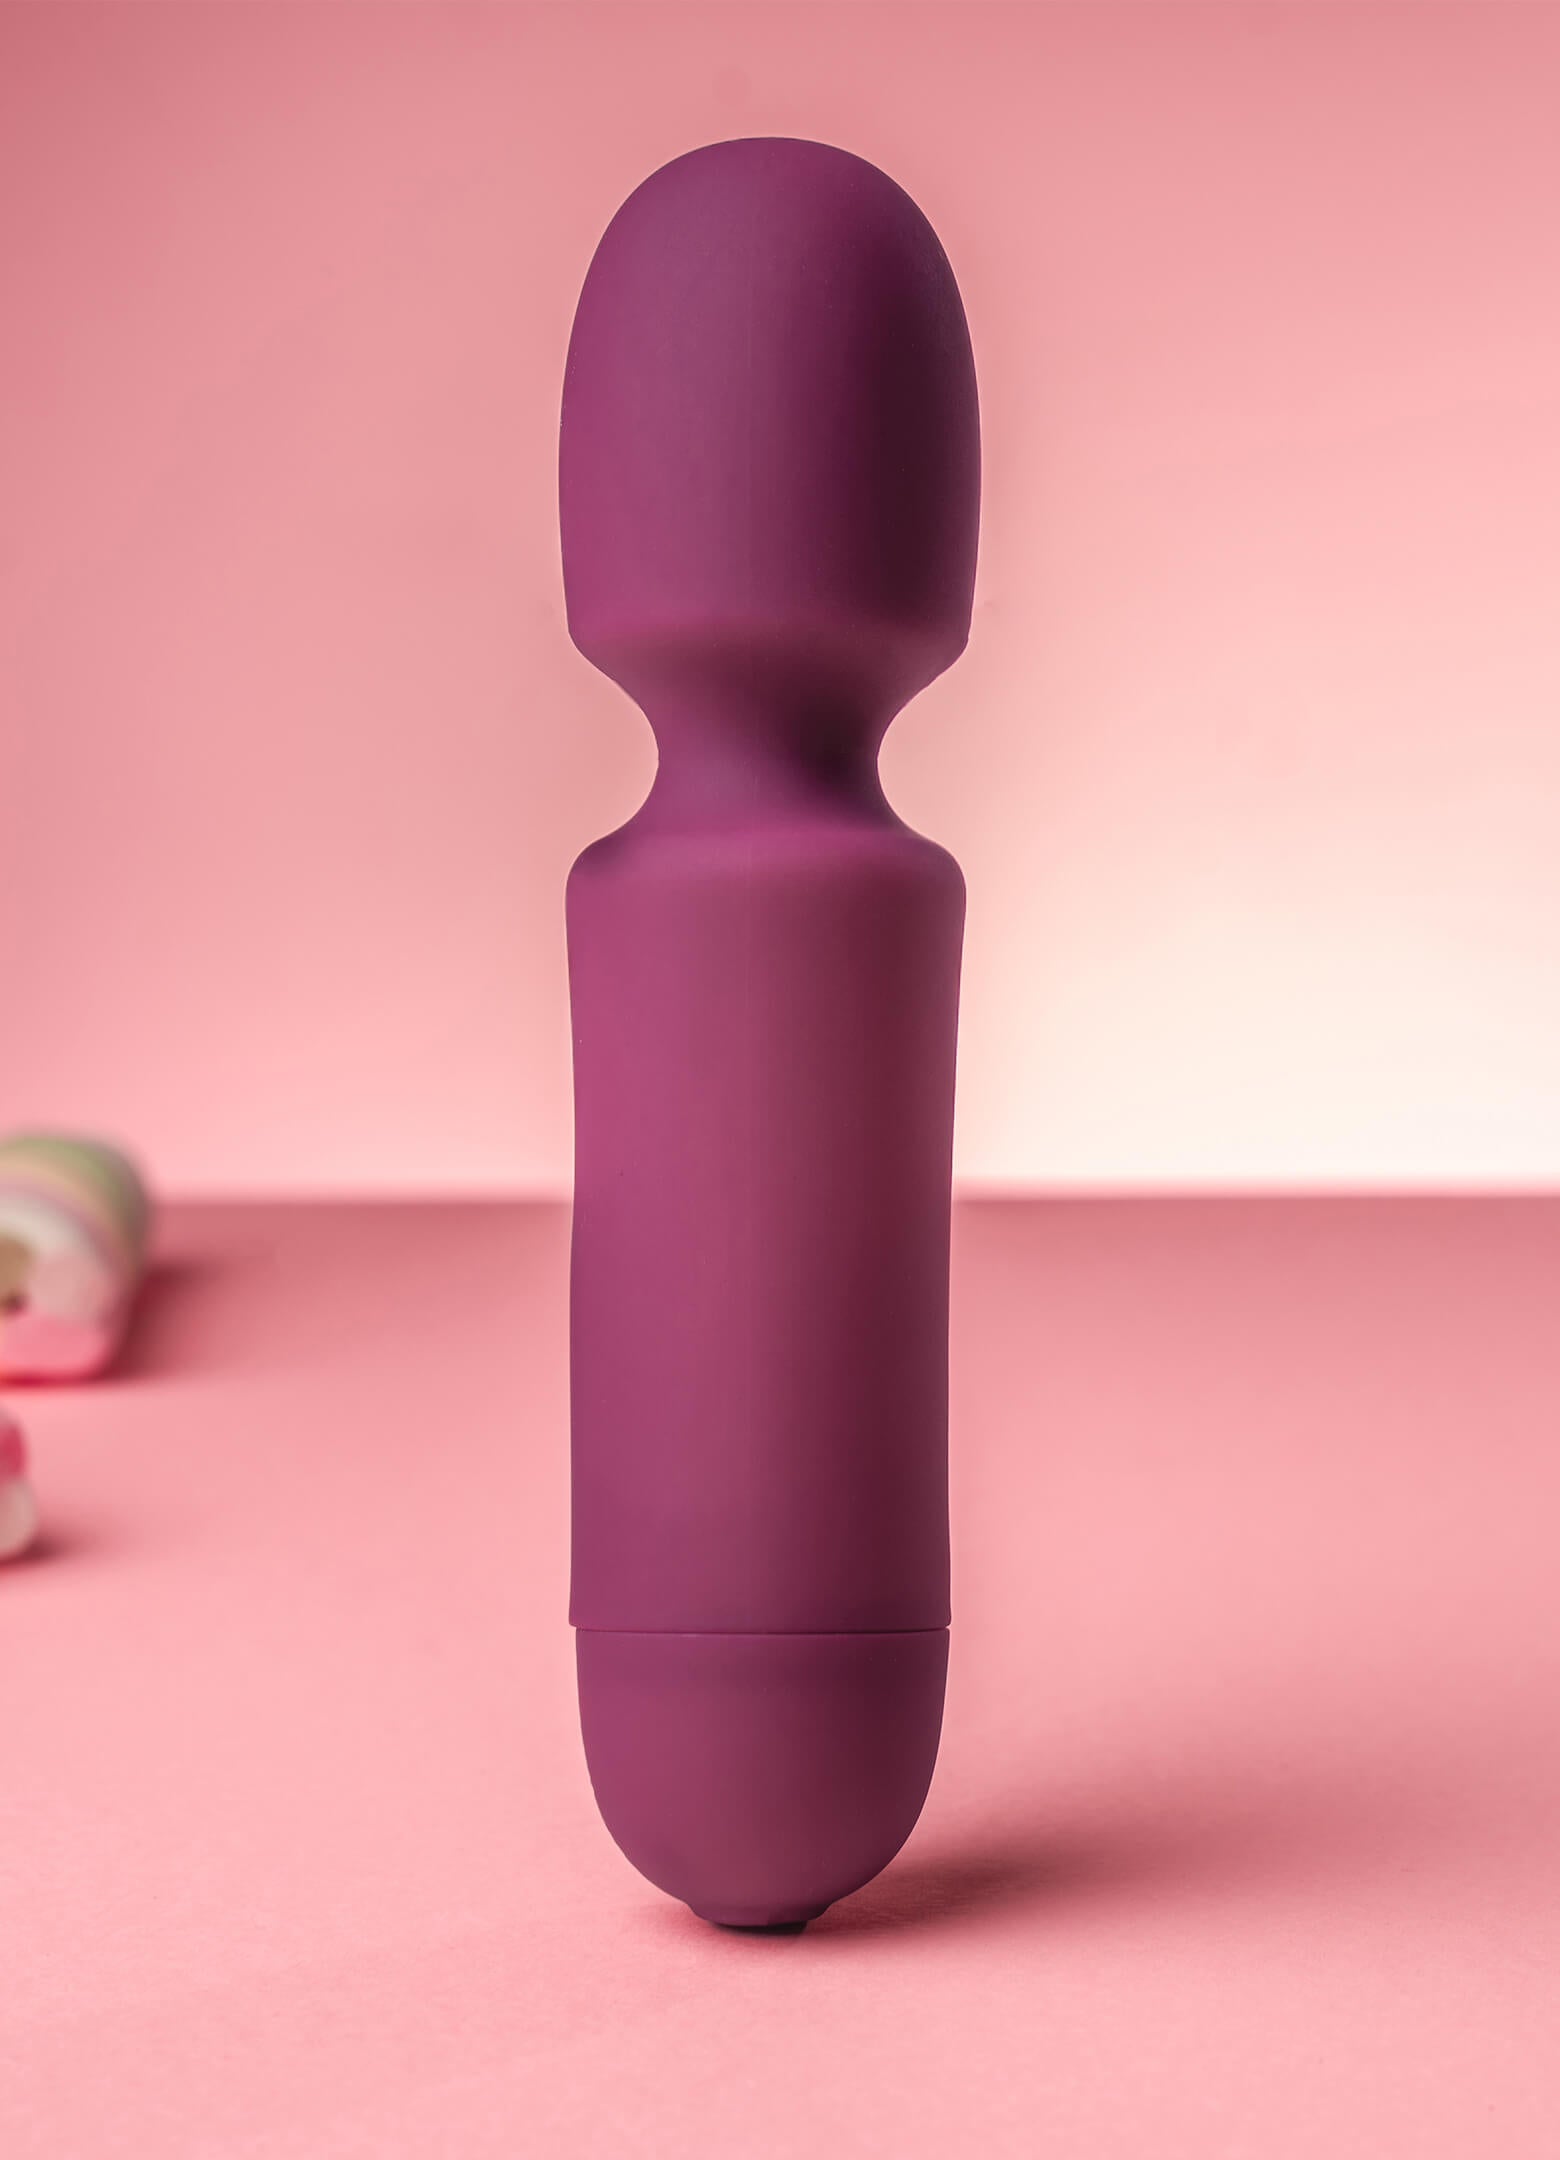 Miniature wand vibrator in burgundy.